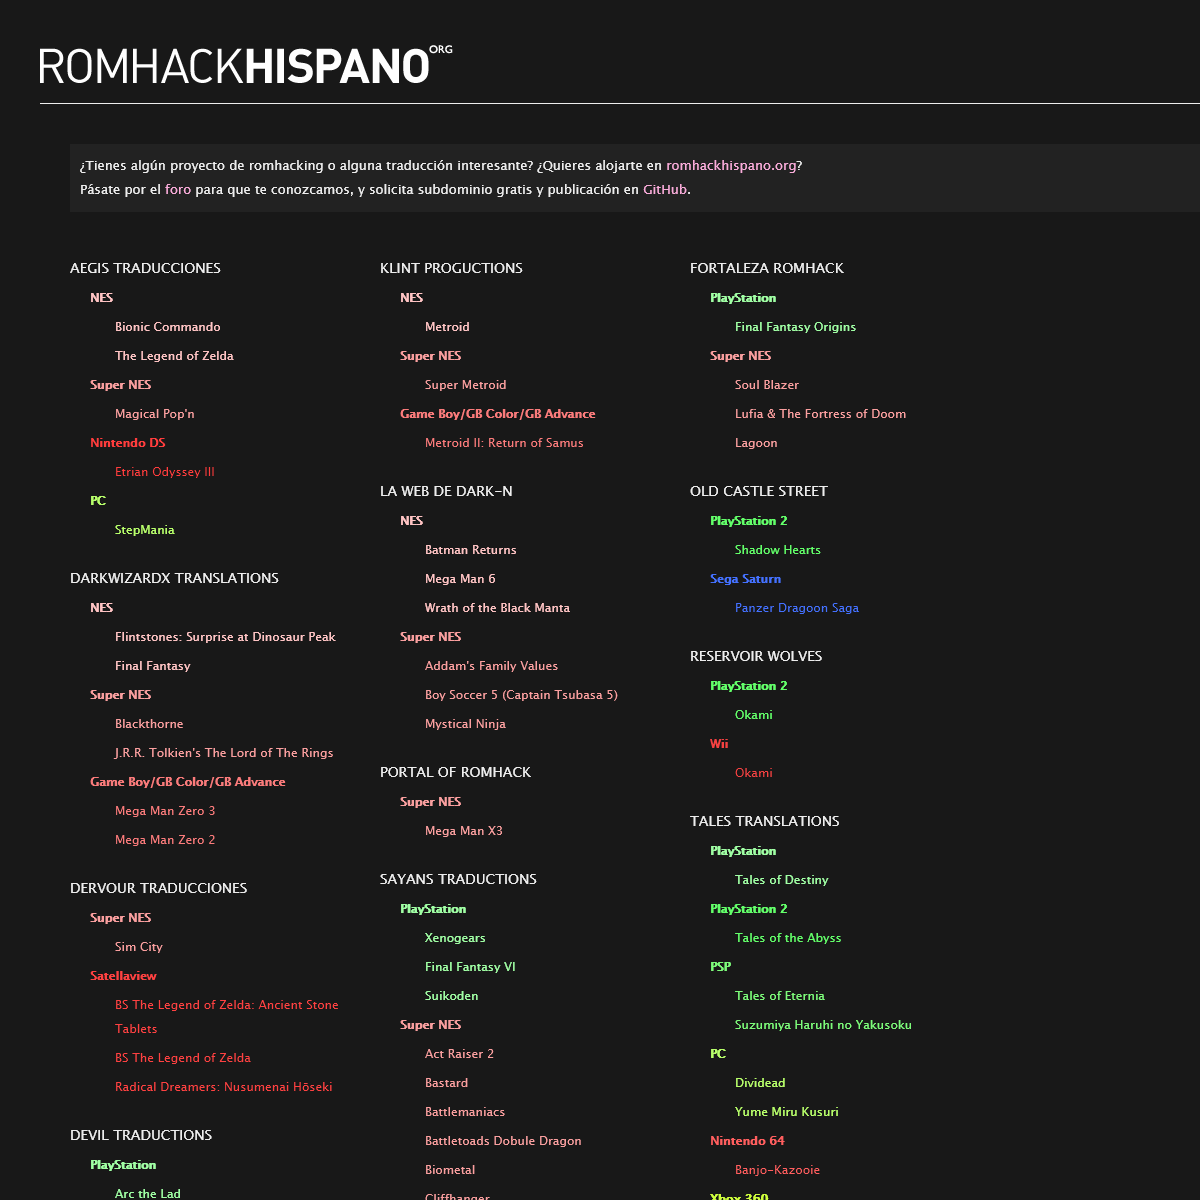 A complete backup of romhackhispano.org